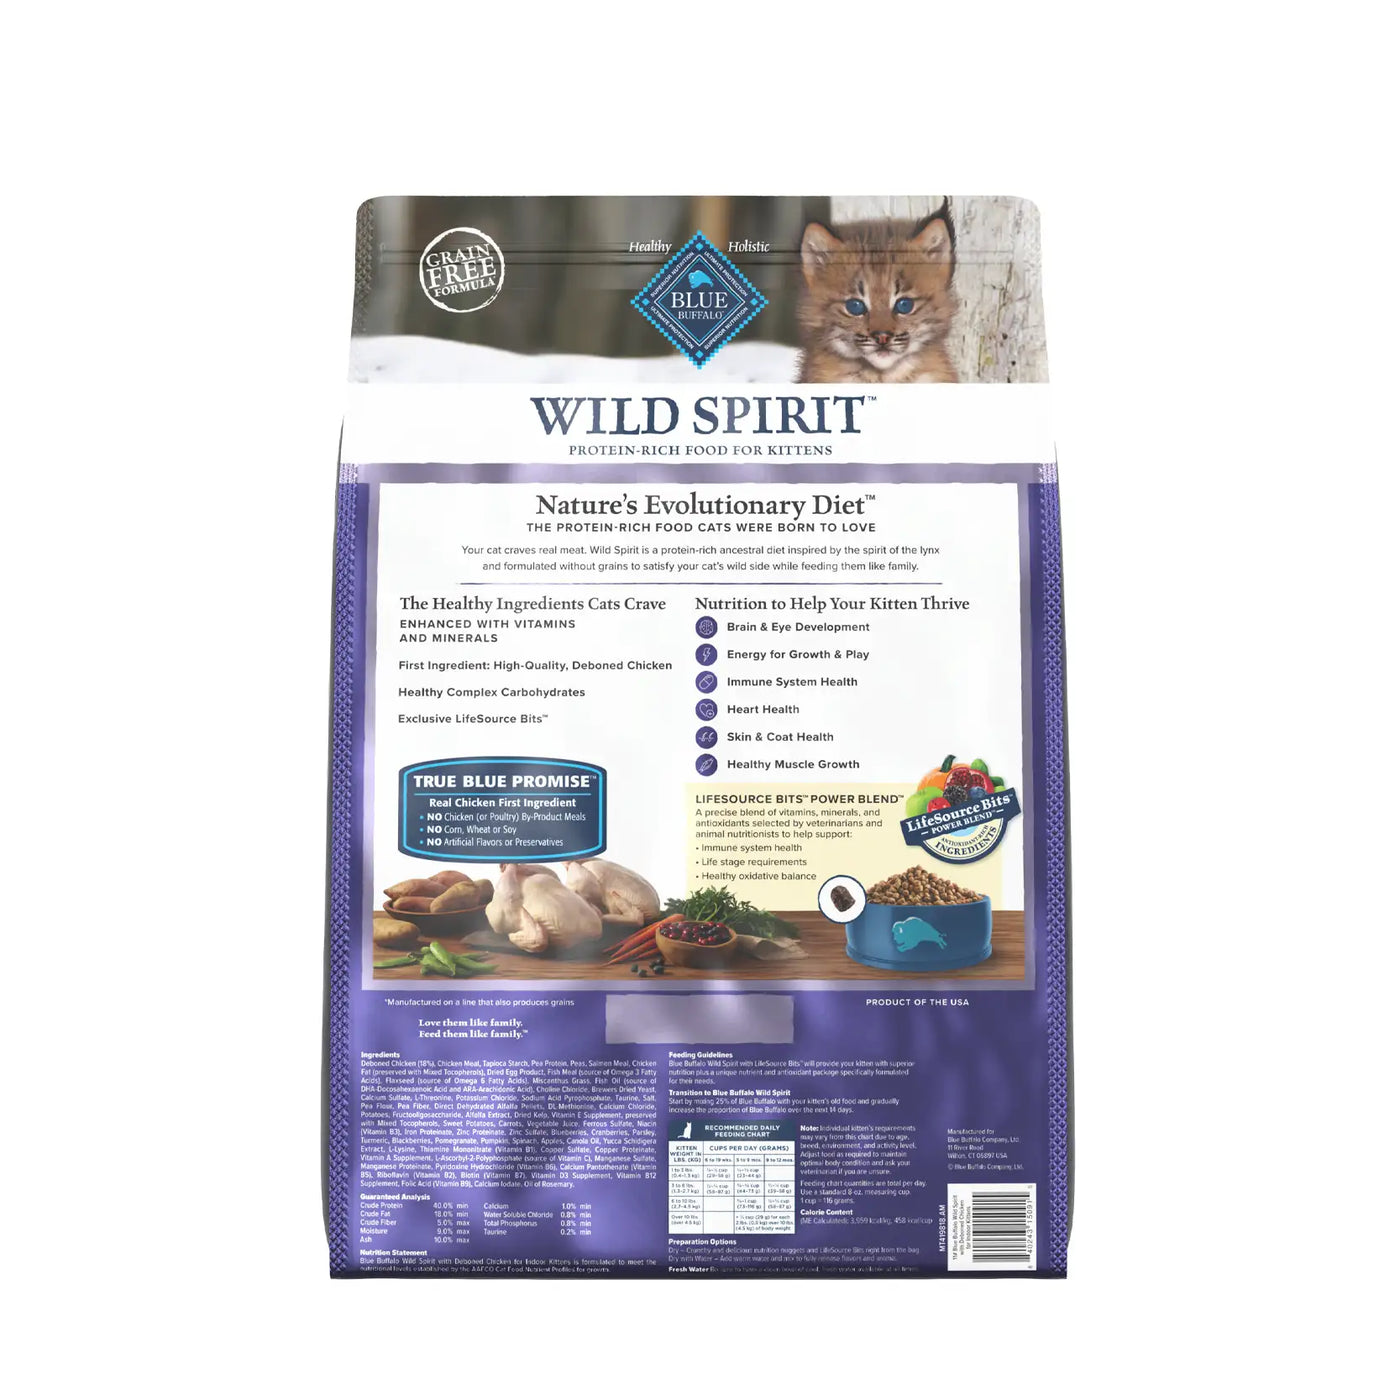 Blue Buffalo Grain-Free Cat Food - WILD Spirit Indoor Kitten Chicken Recipe